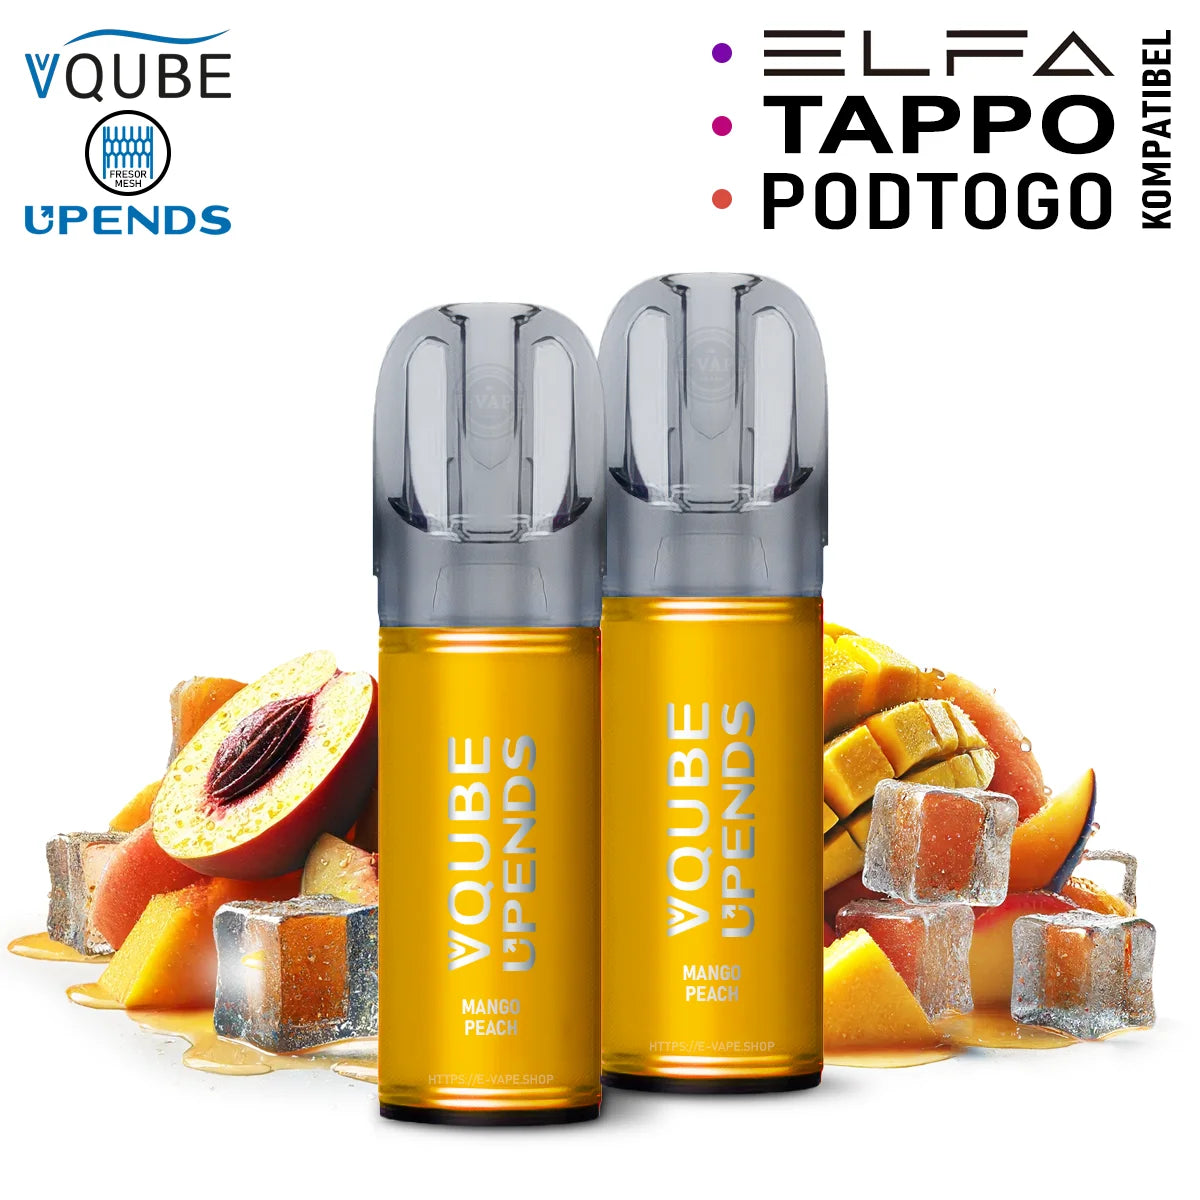 Vqube Upends Pod Mango Peach 20mg ELFA / Tappo / Pod2Go